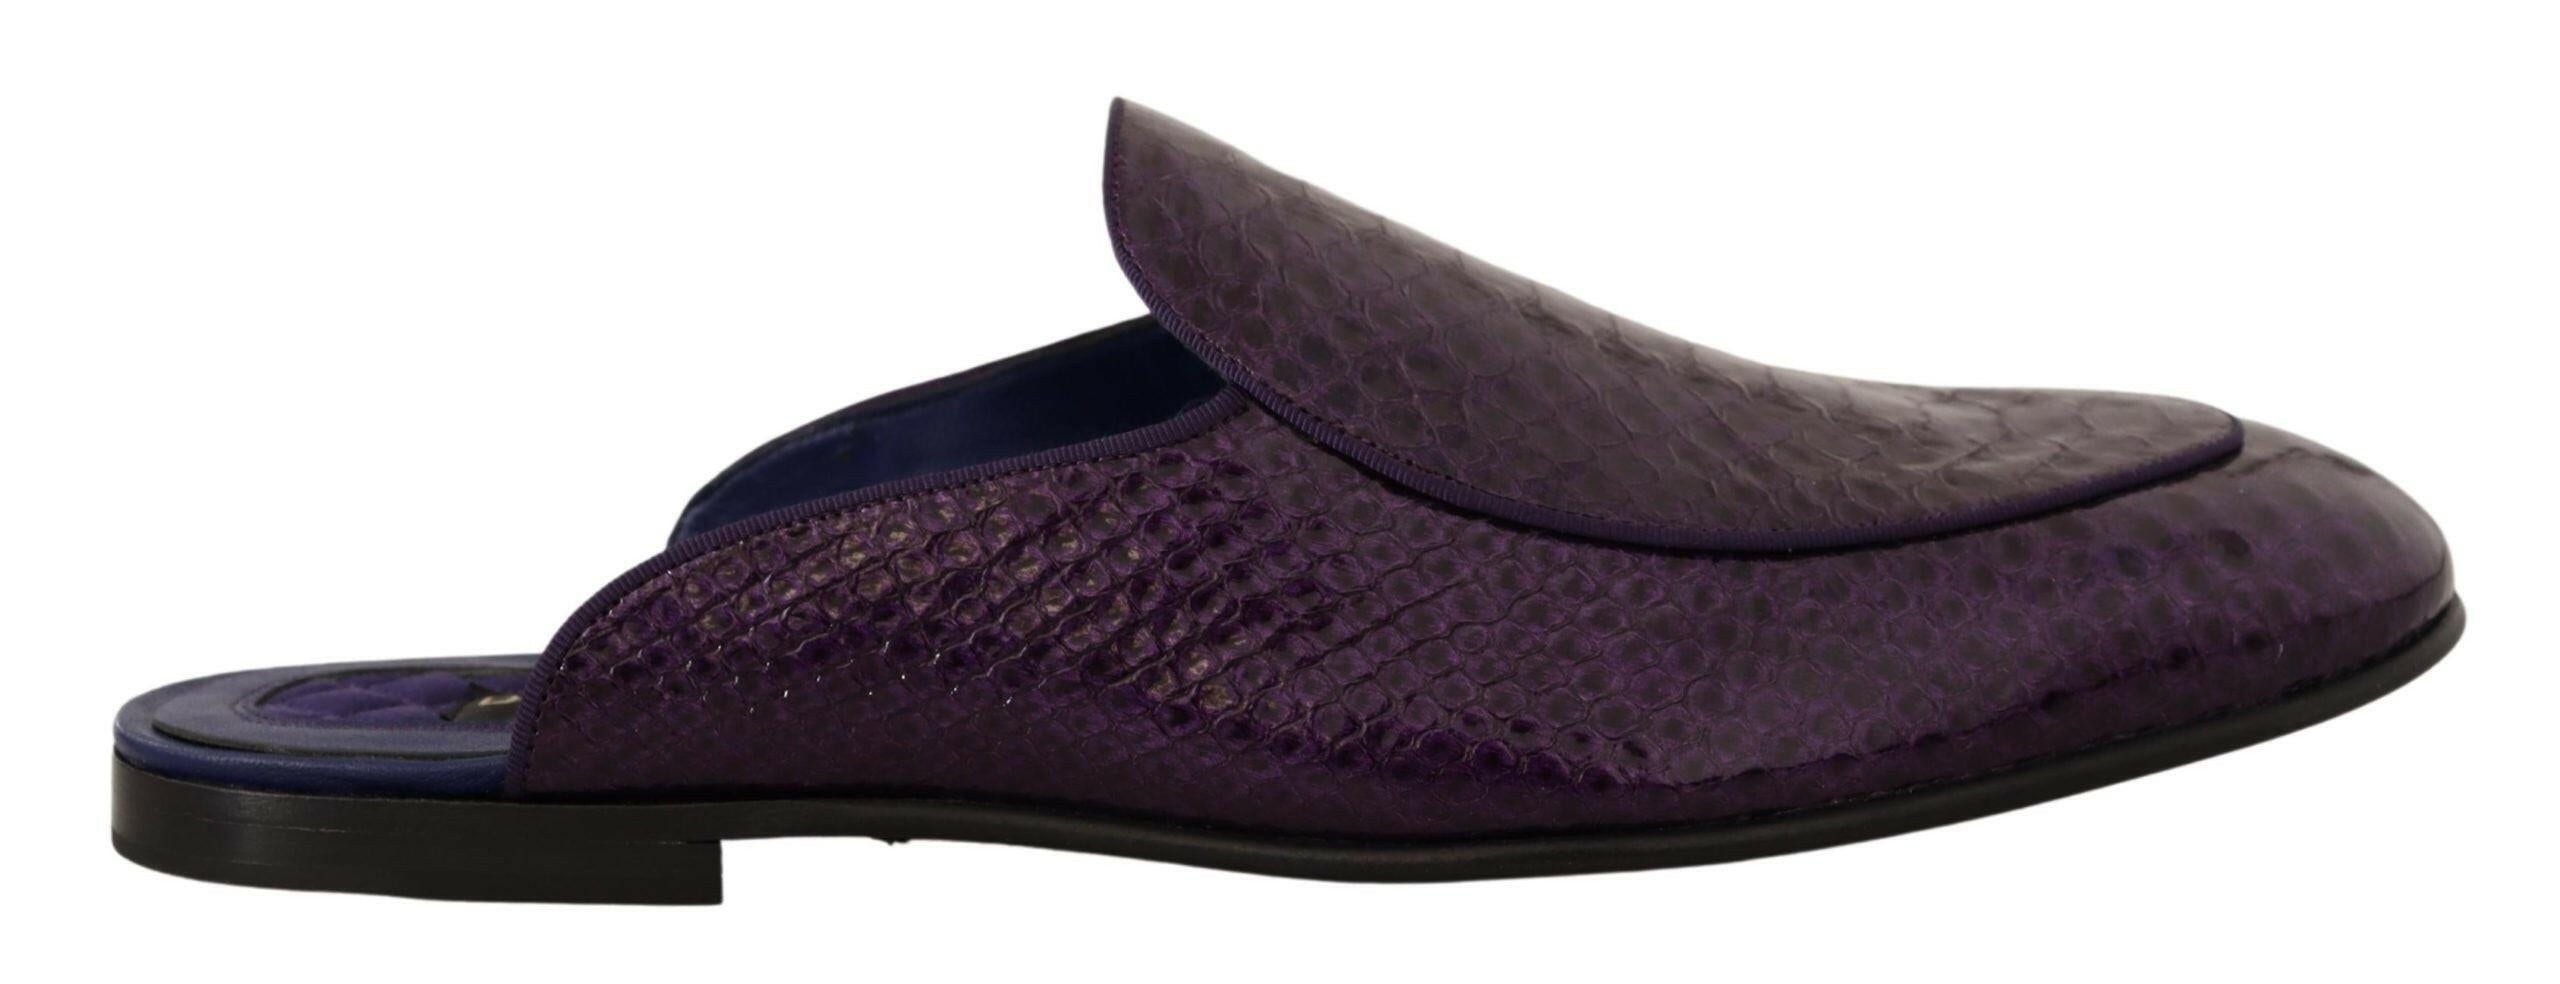 Dolce & Gabbana Purple Exotic Leather Flats Slides Shoes - GENUINE AUTHENTIC BRAND LLC  